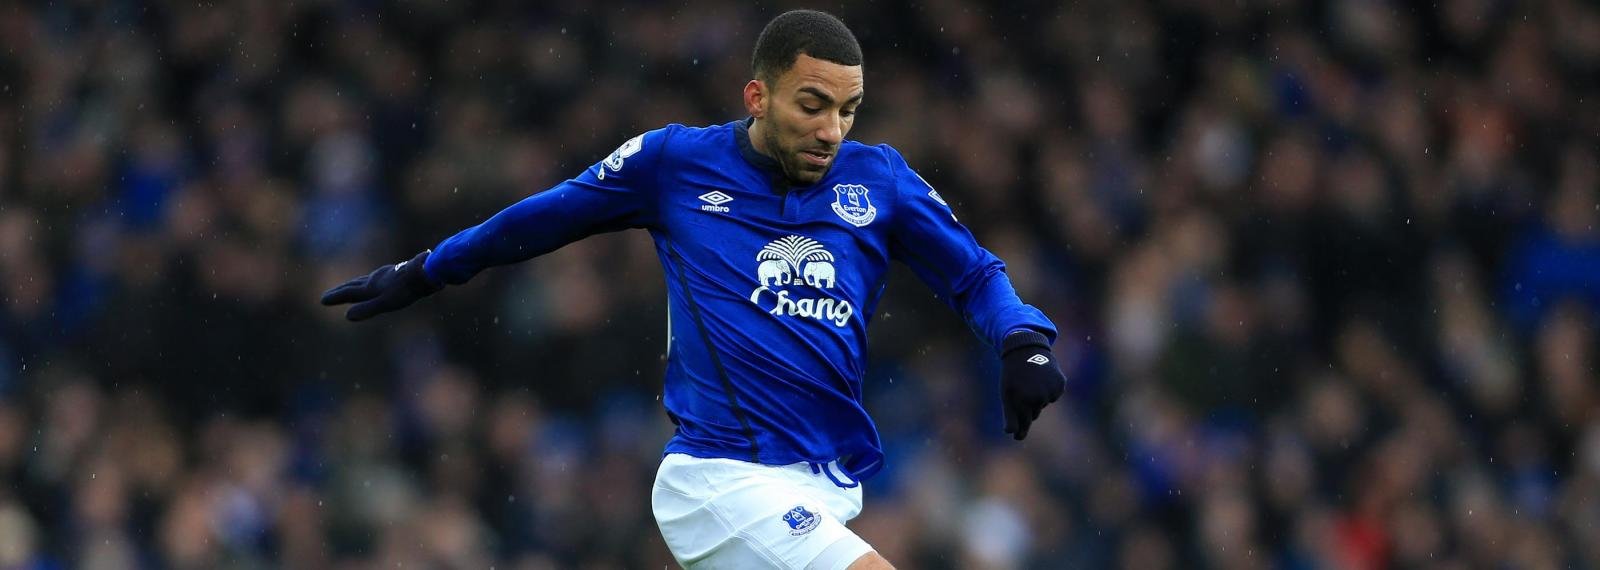 Profile: Everton’s in-form winger, Aaron Lennon